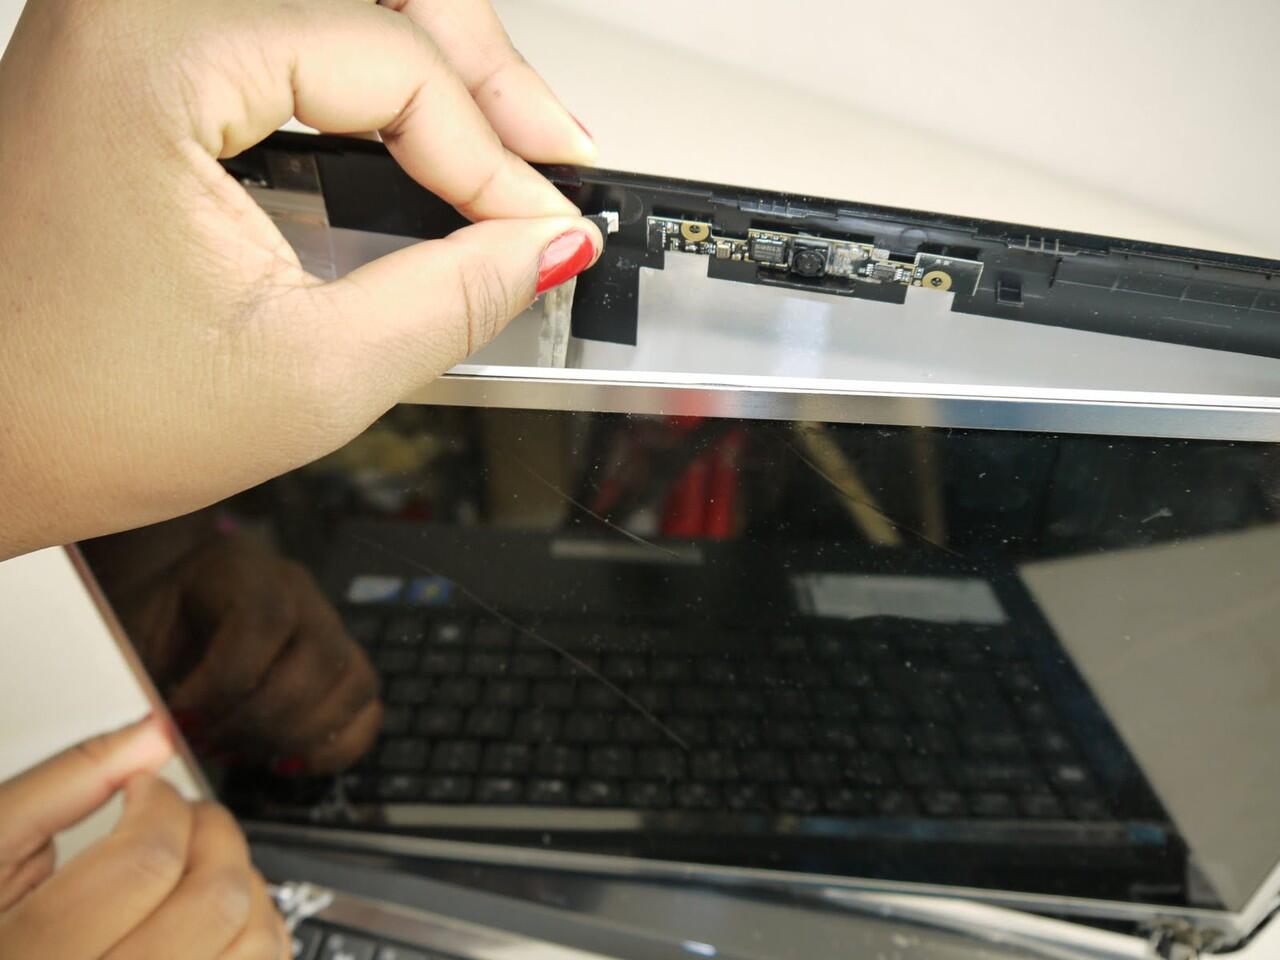 &#91;TUTORIAL&#93; Cara Membongkar LCD LED Laptop Sendiri Sangat Mudah